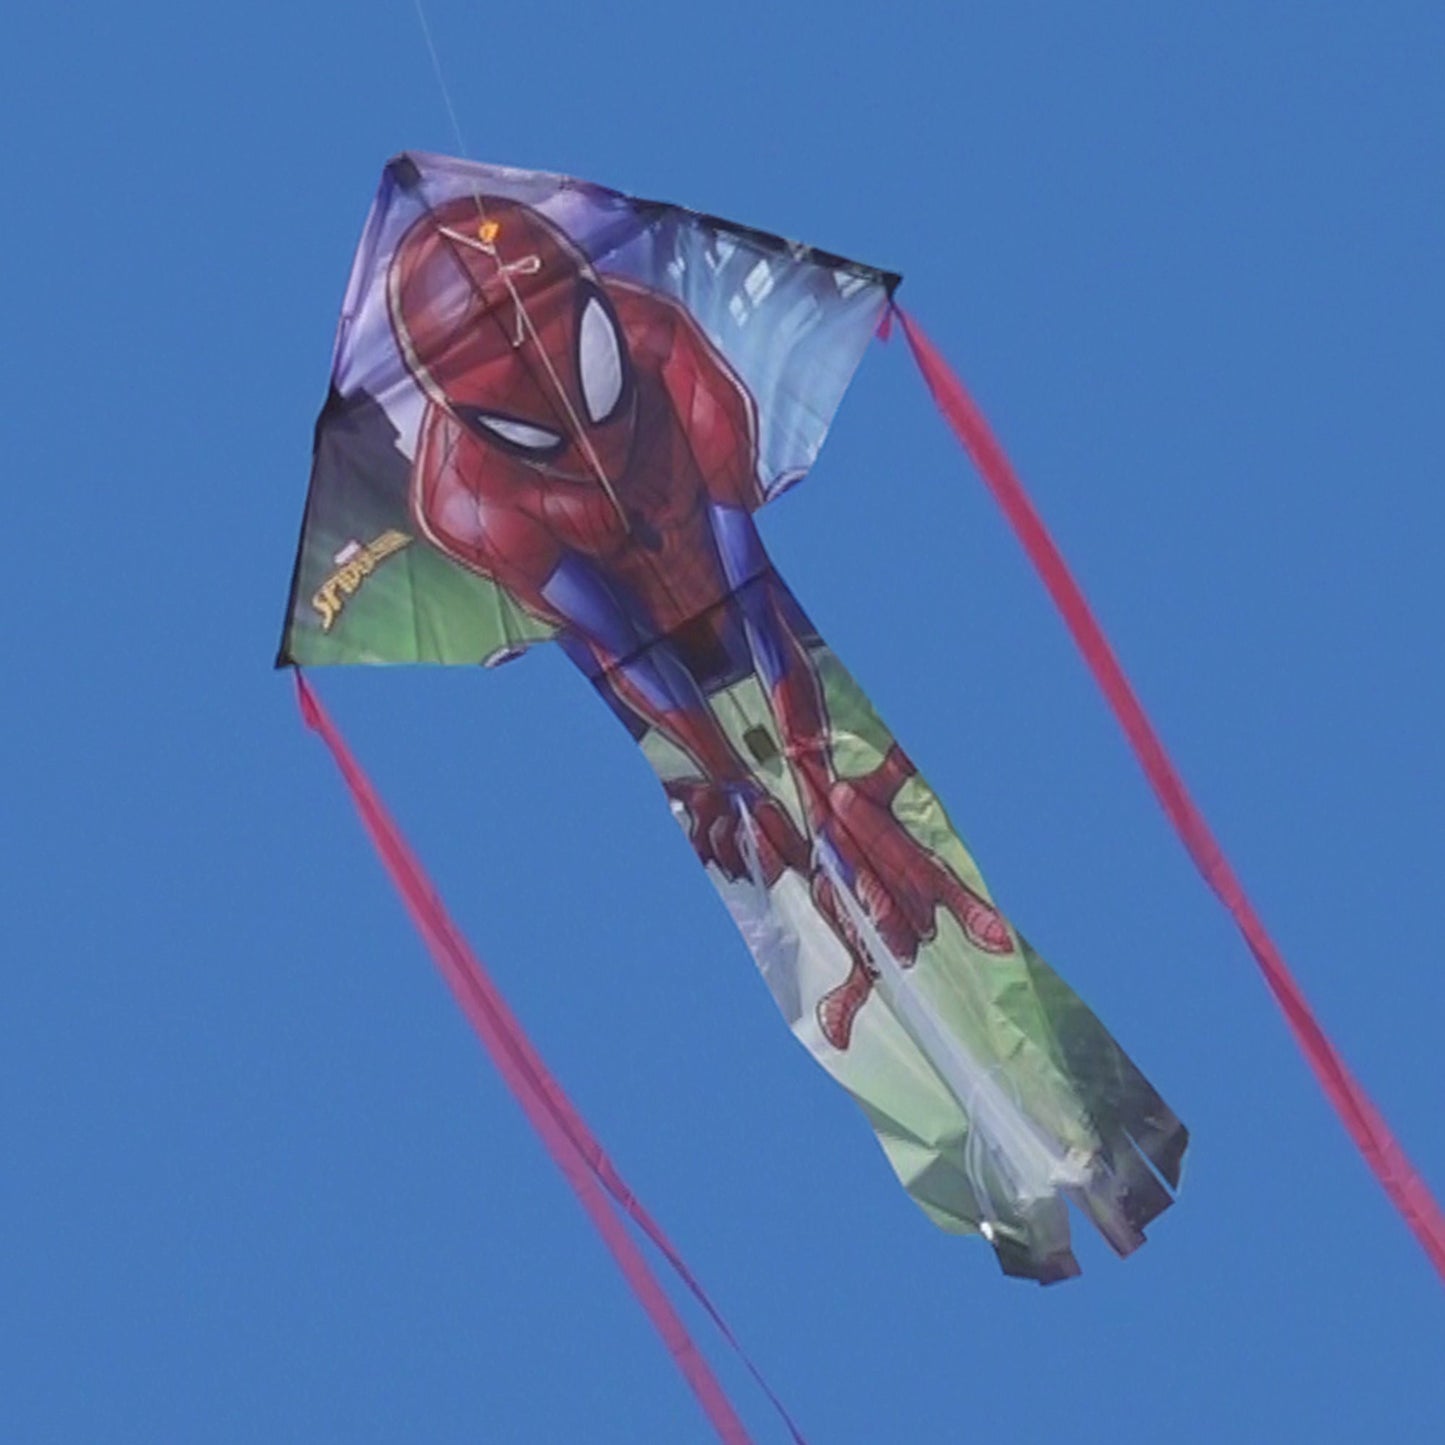 X Kites SkyFlier 50 Spider-Man + X Kites FaceKites Spider-Man Nylon Kite Bundle photo of product in use